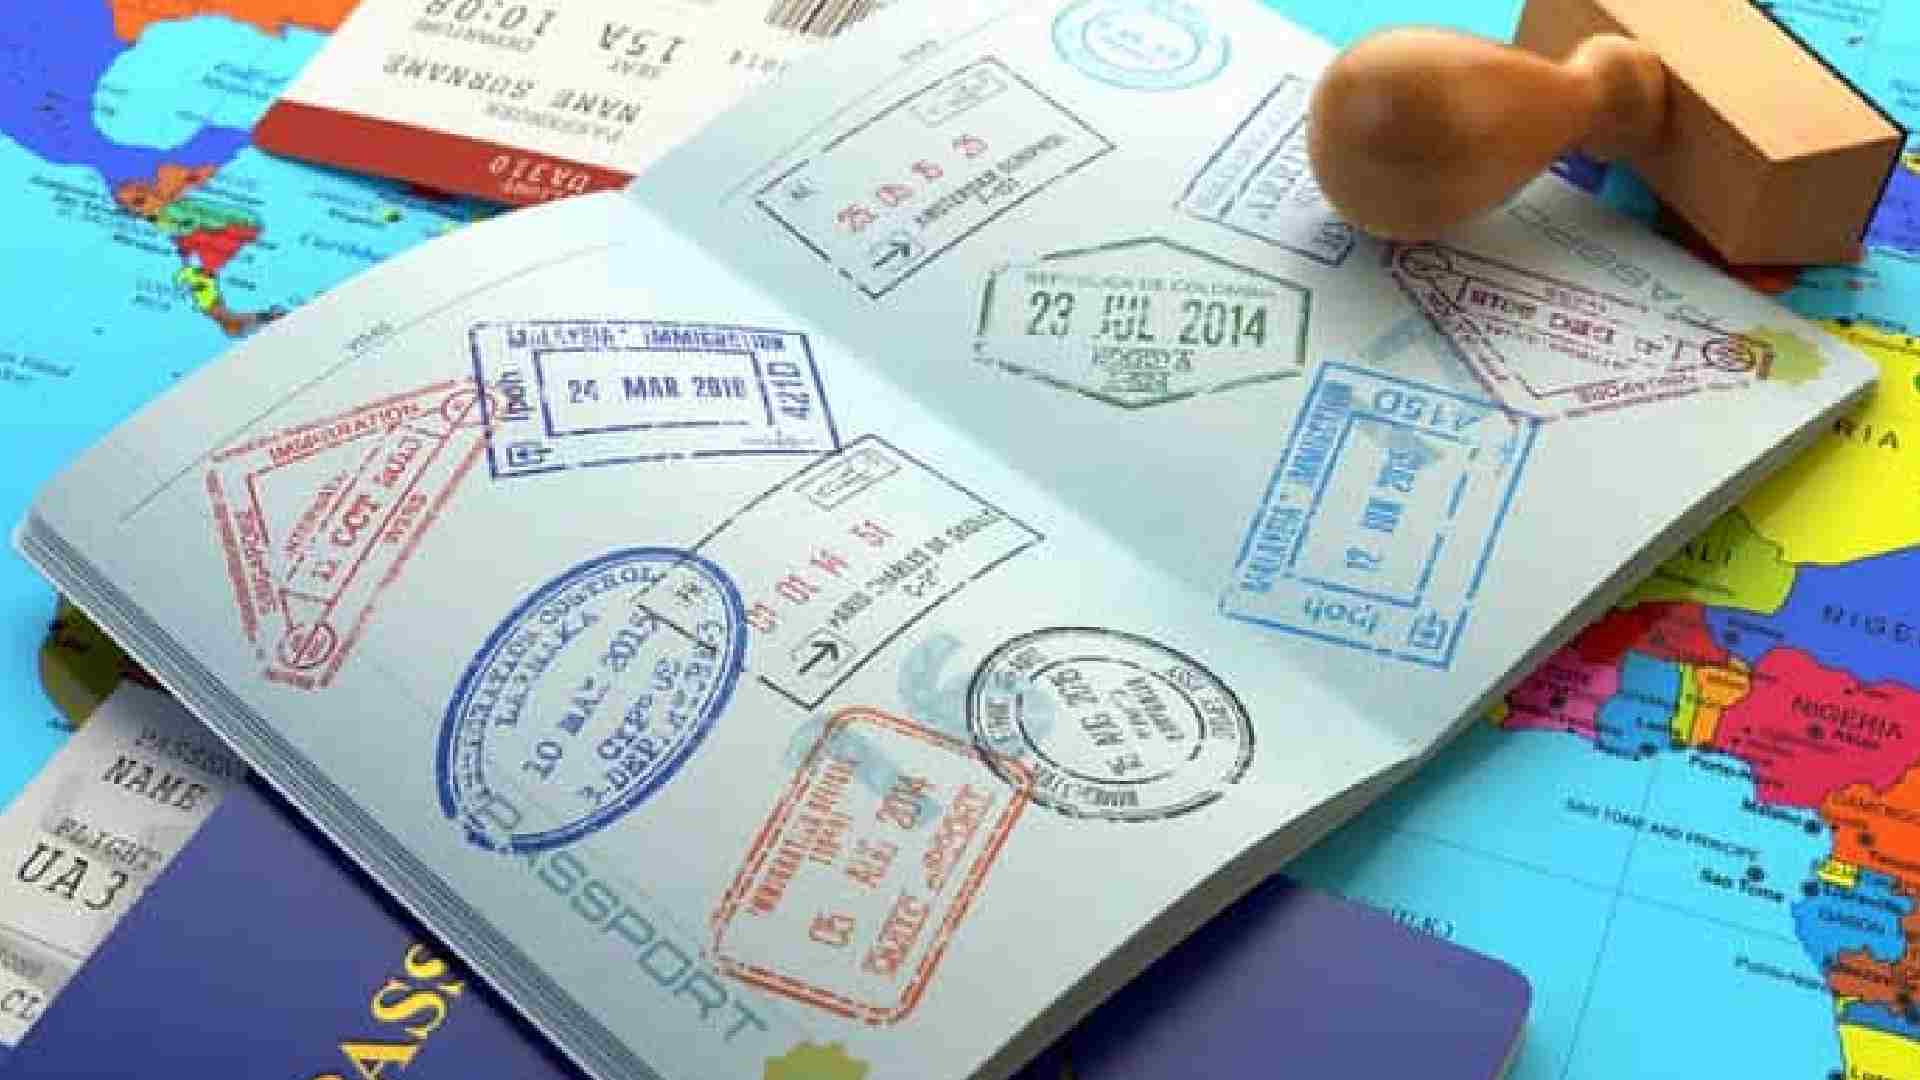 Kuwait on arrival visa for UAE residents 